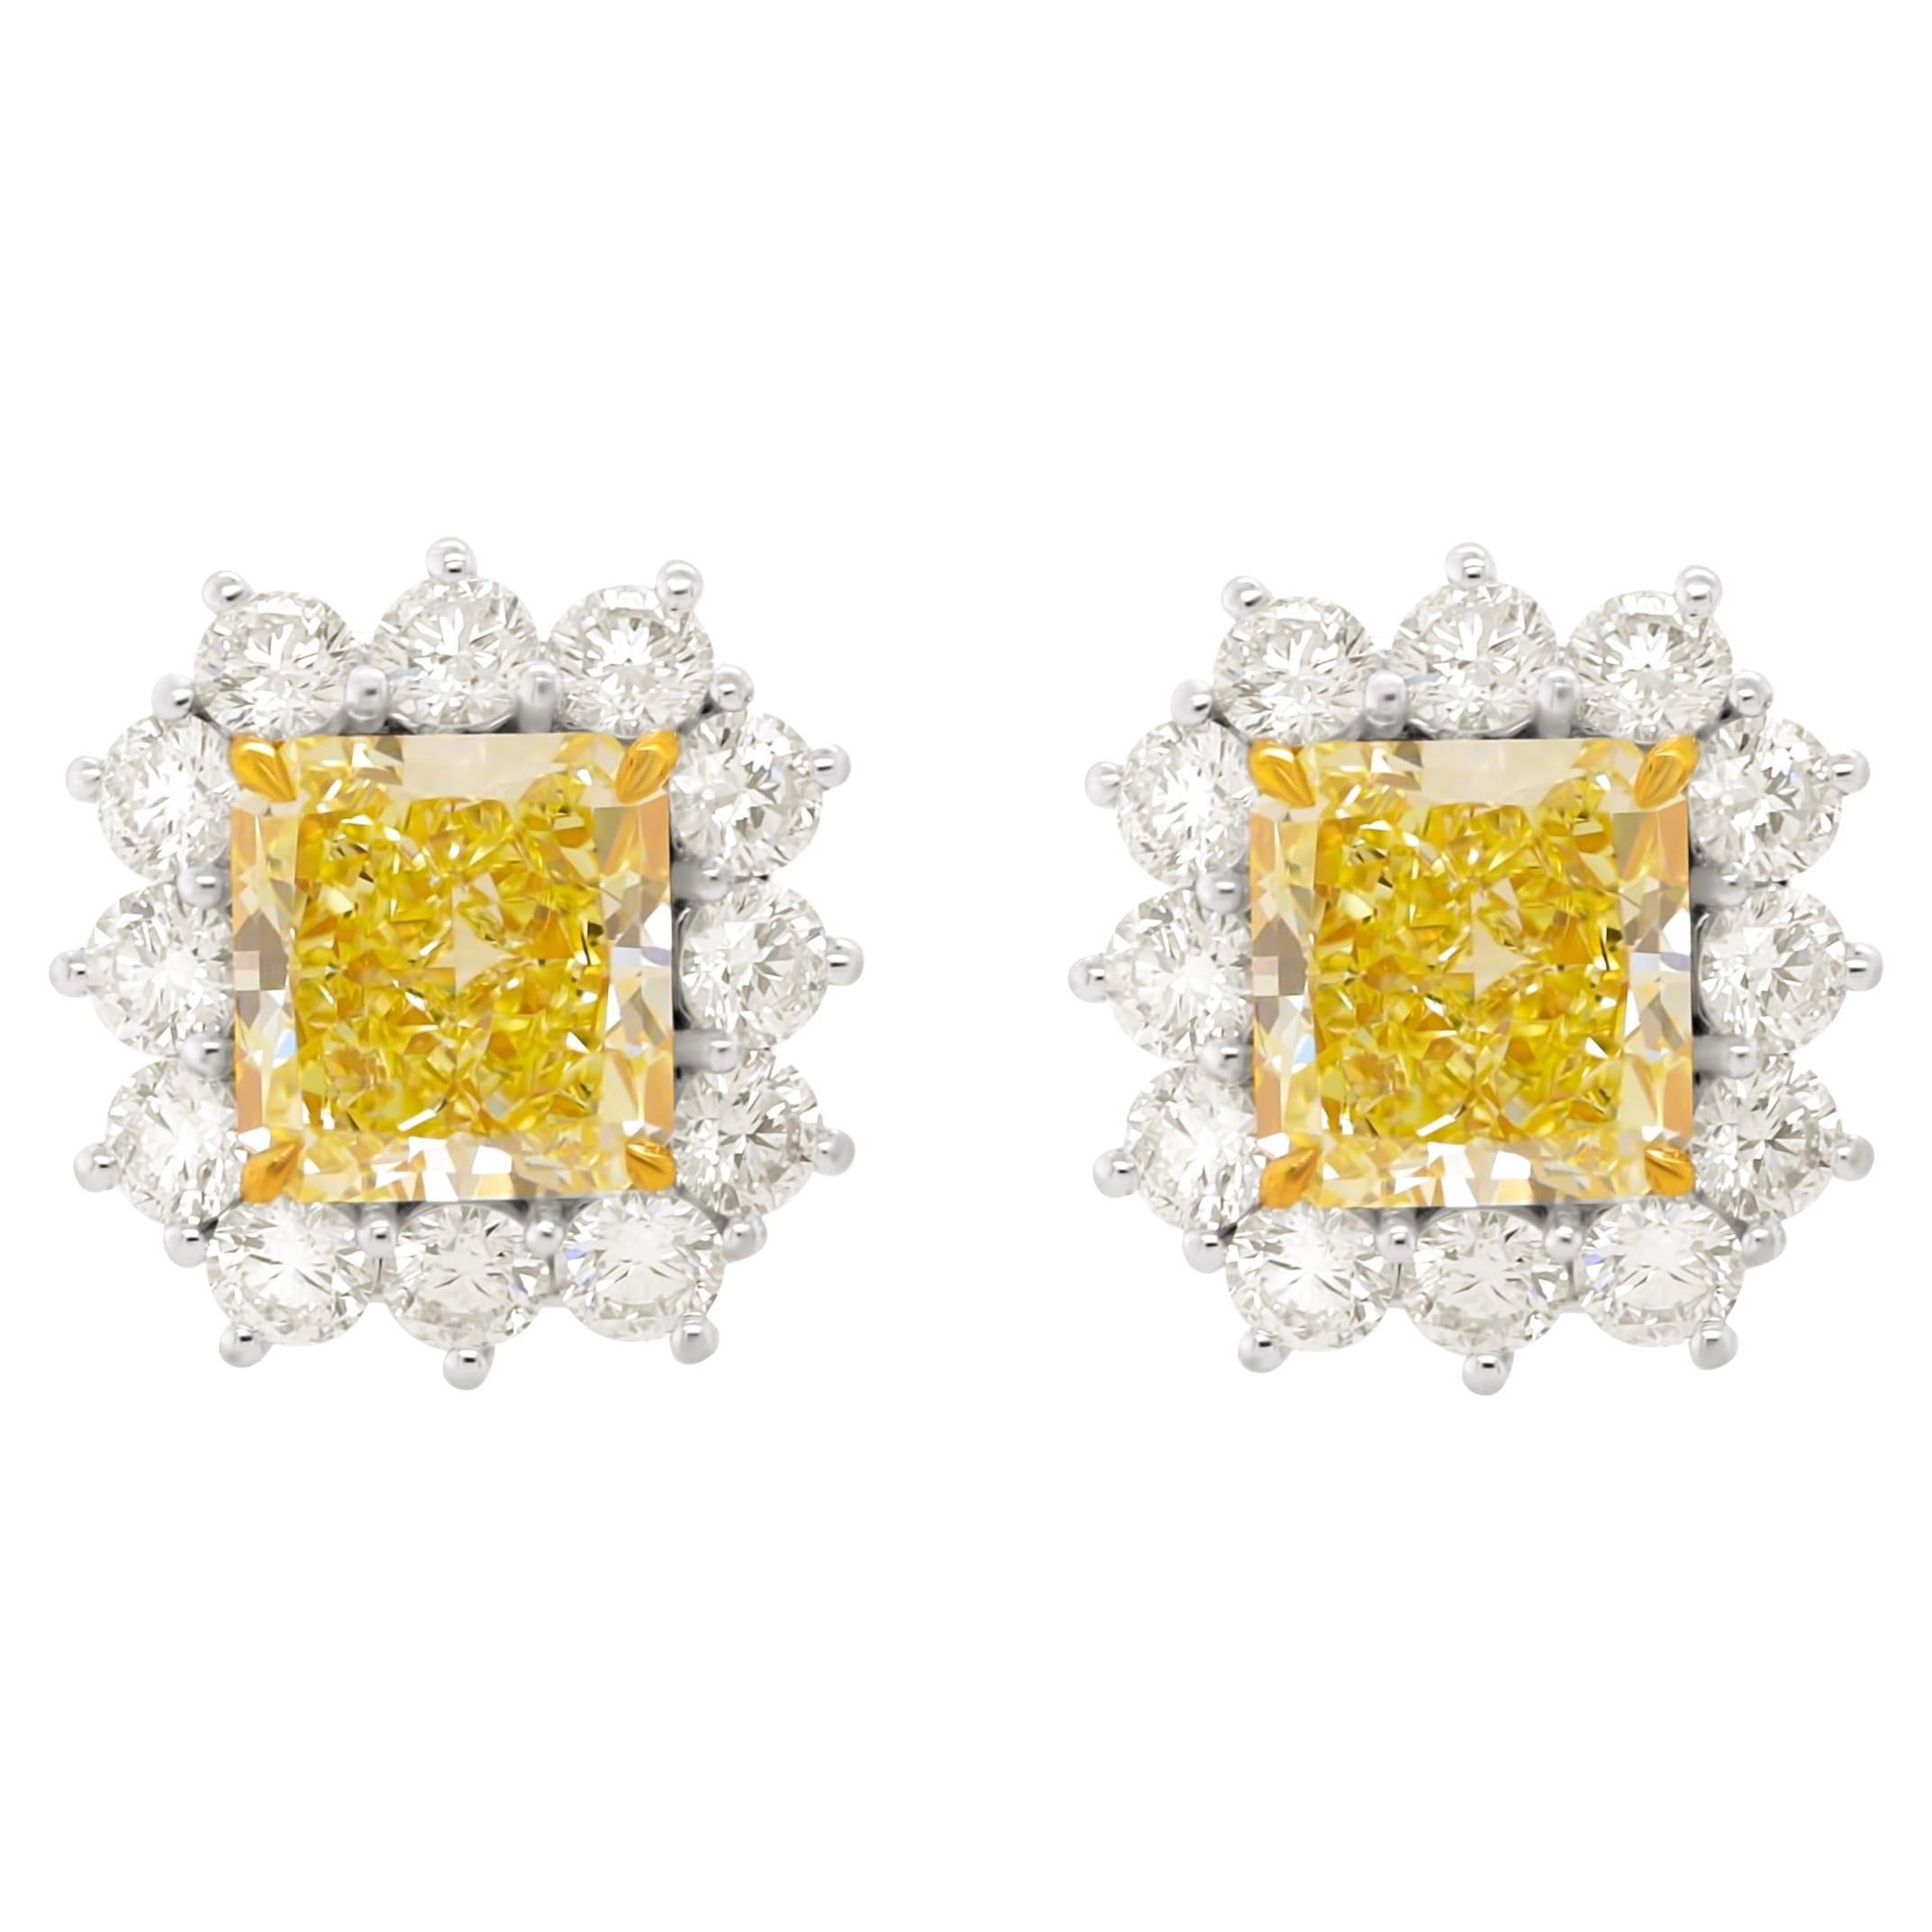 Diana M. 9,79 Karat gelbe Diamant-Ohrstecker